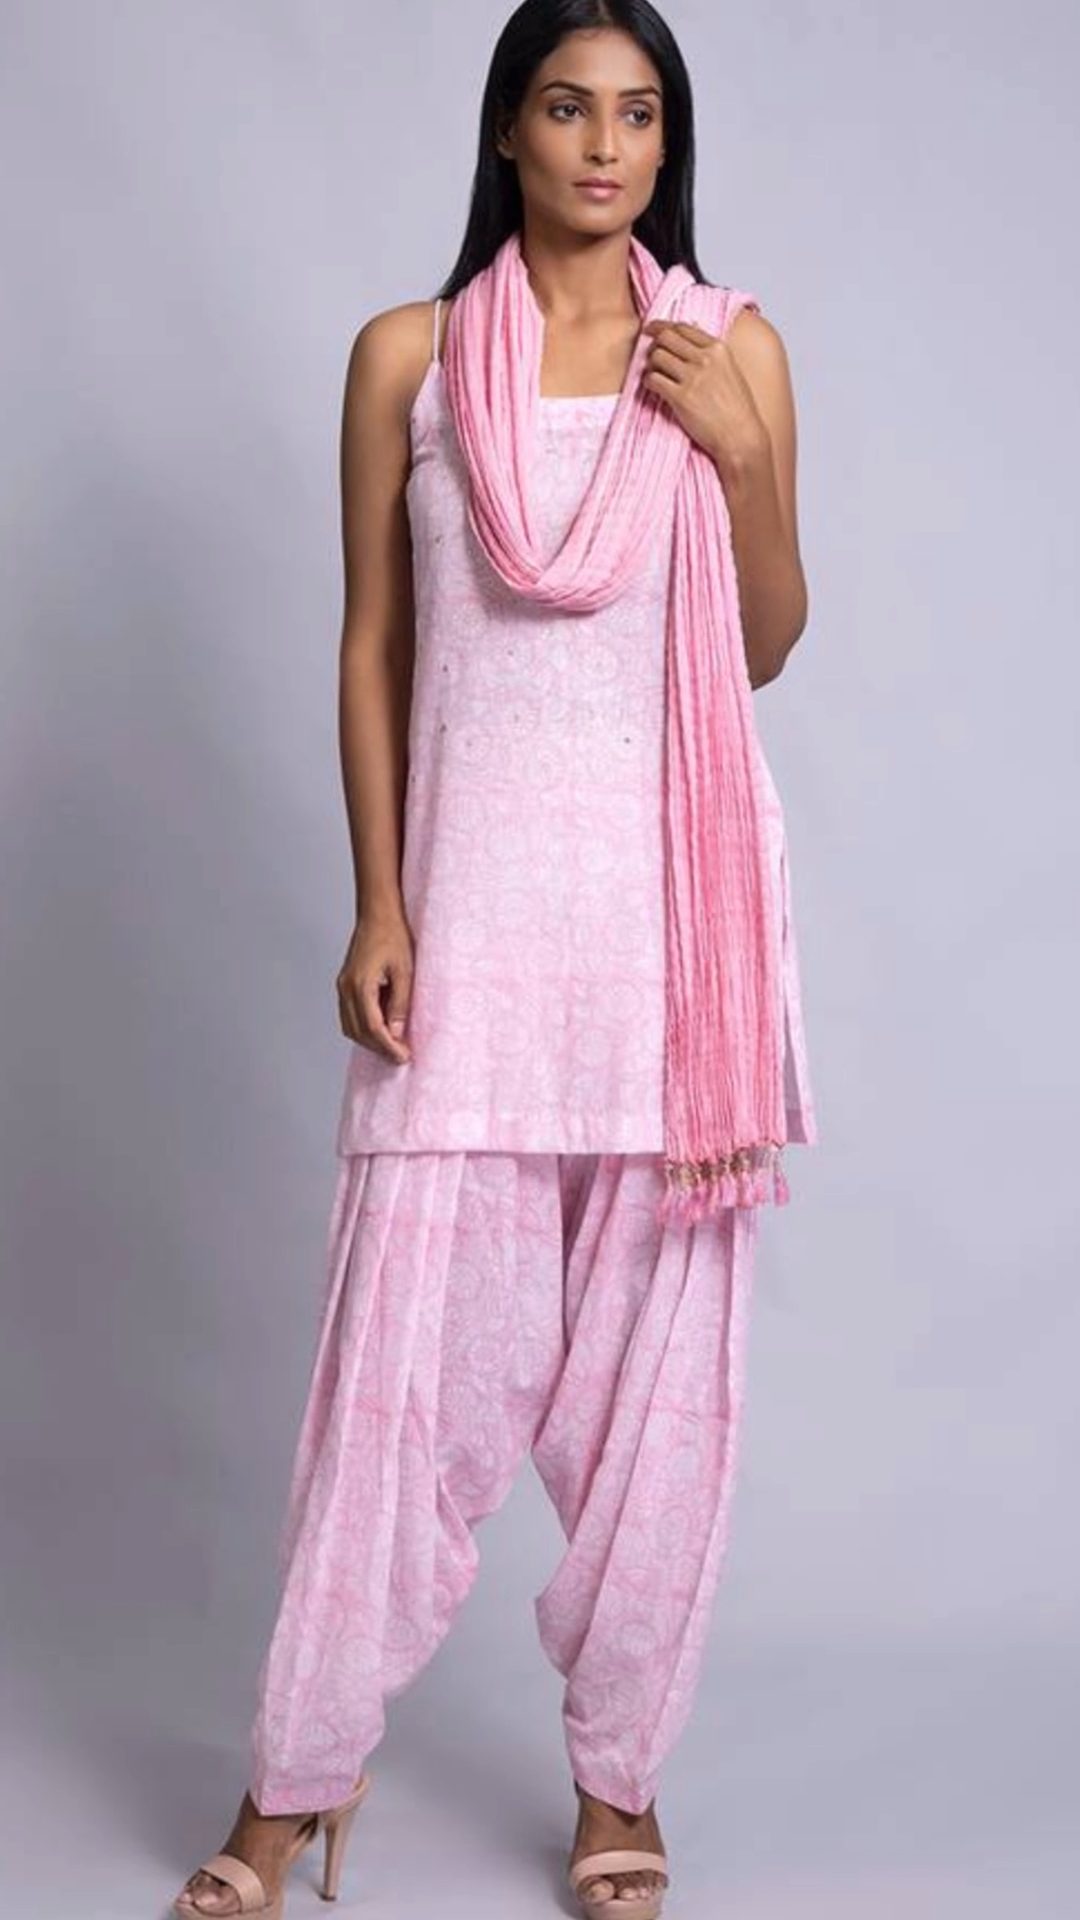 New Latest casual wear salwar kurti designs 2020 | Patiala kurti design | Salwar  suits 2020 ideas - YouTube